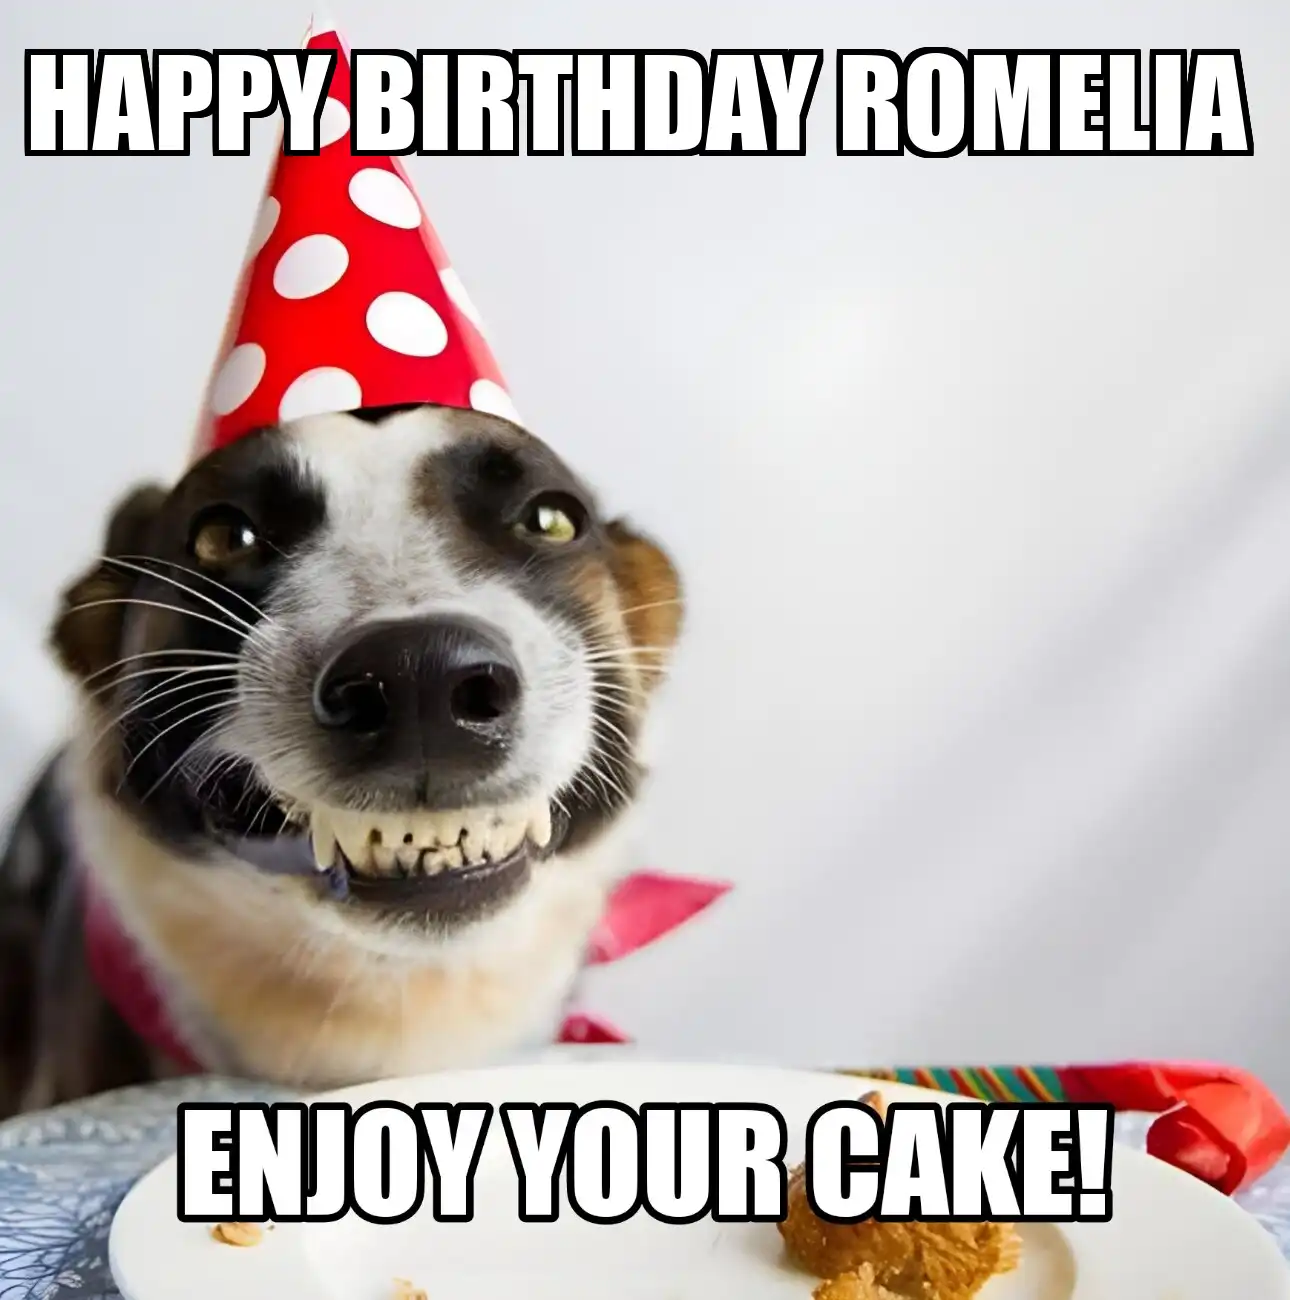 Happy Birthday Romelia Enjoy Your Cake Dog Meme